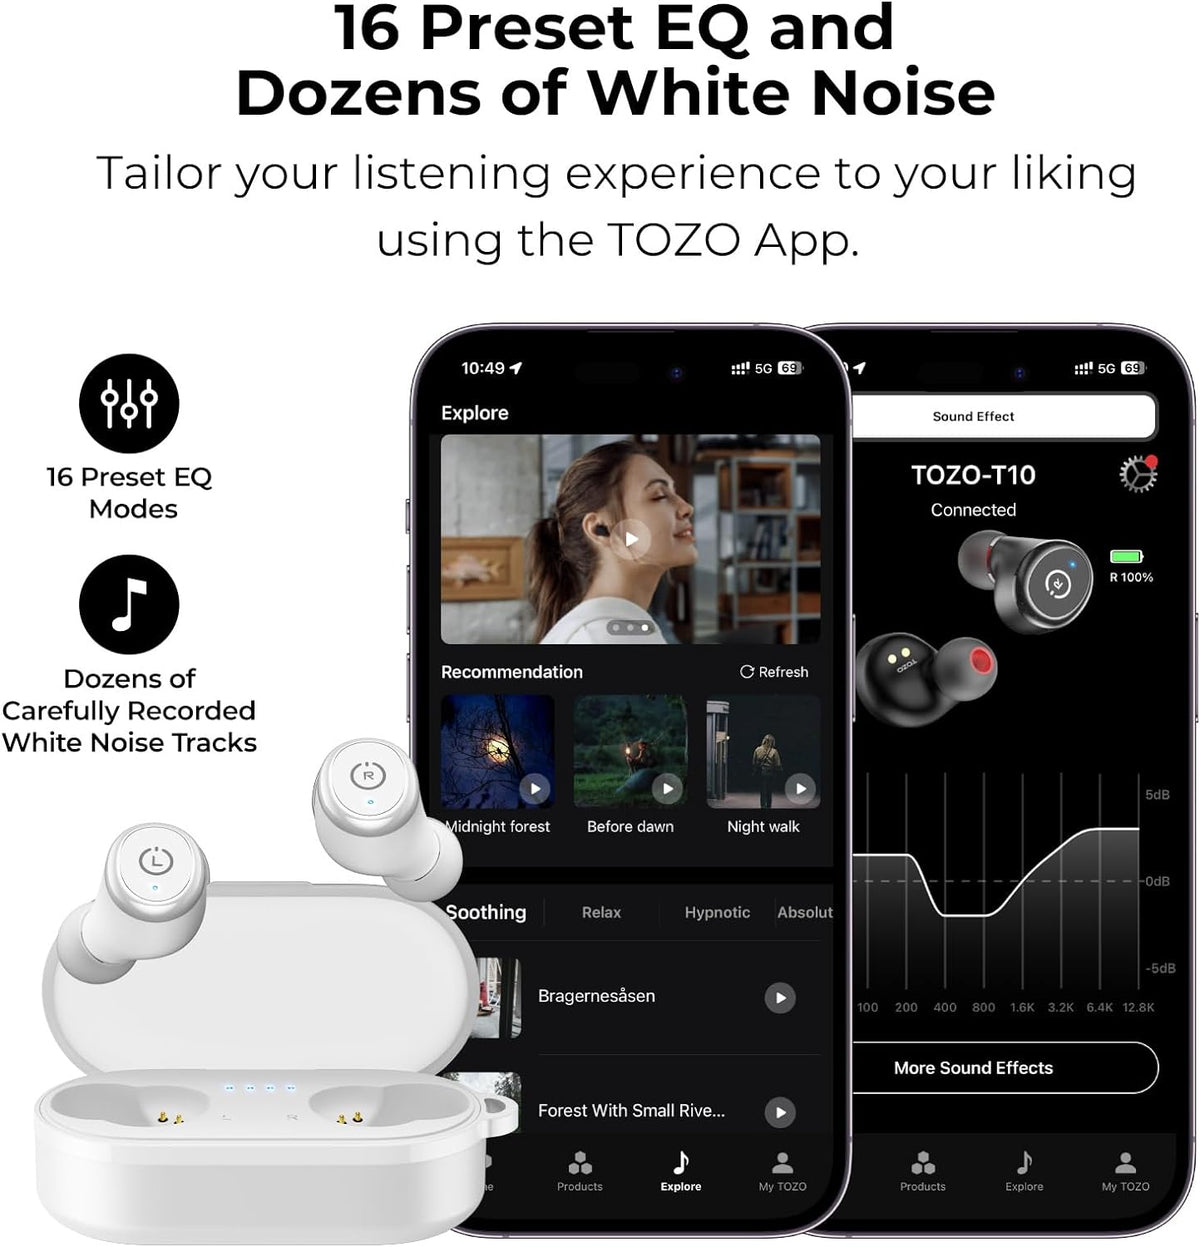 TOZO T10 Bluetooth 5.3 Wireless Earbuds